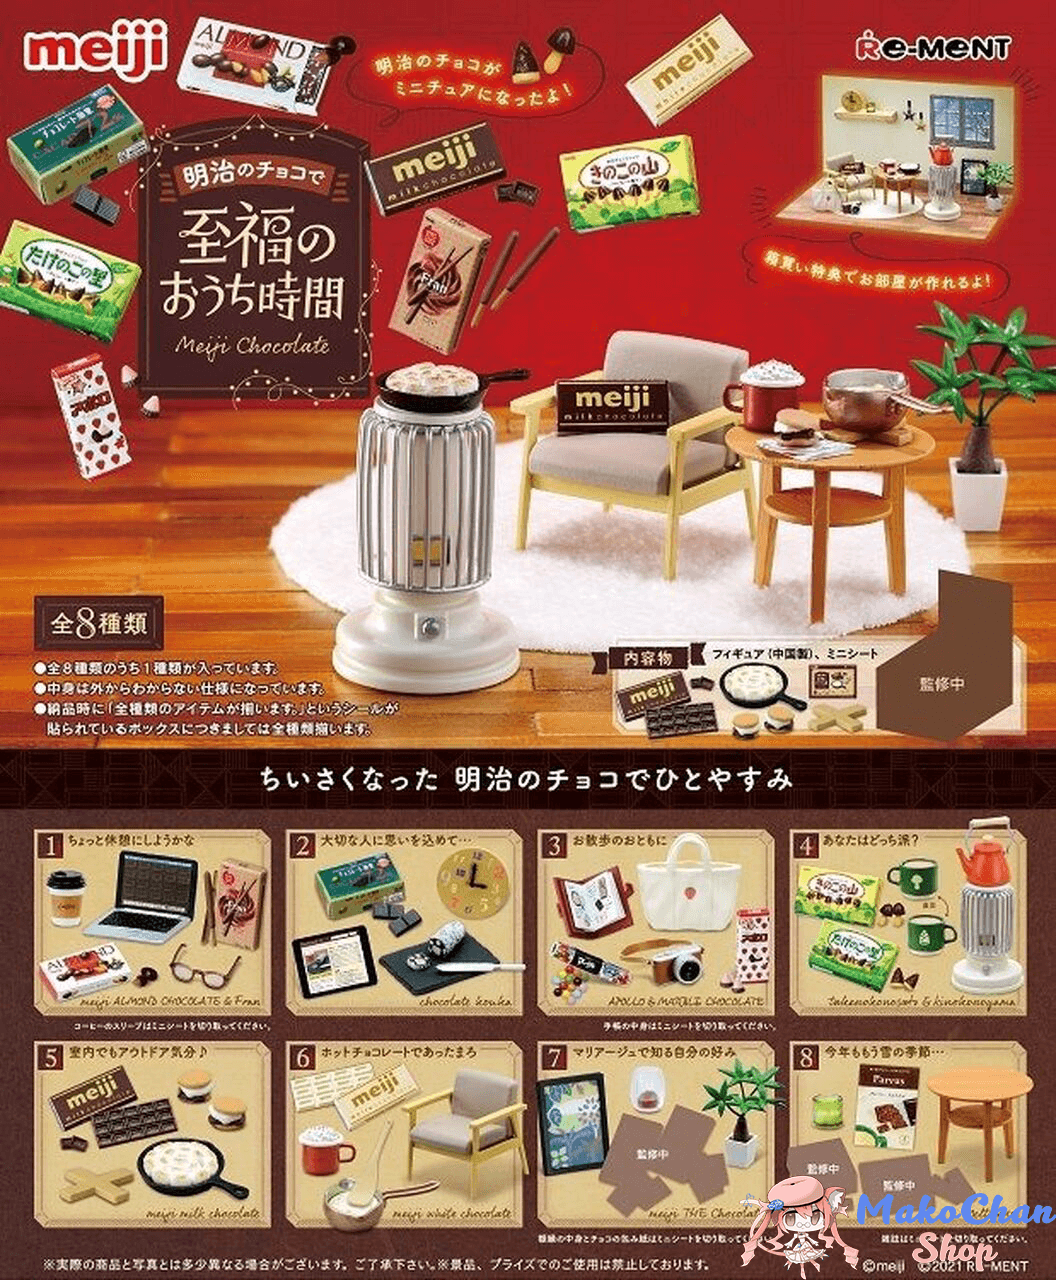 Re-ment Meiji Chocolate Sweet Time Makochan.store